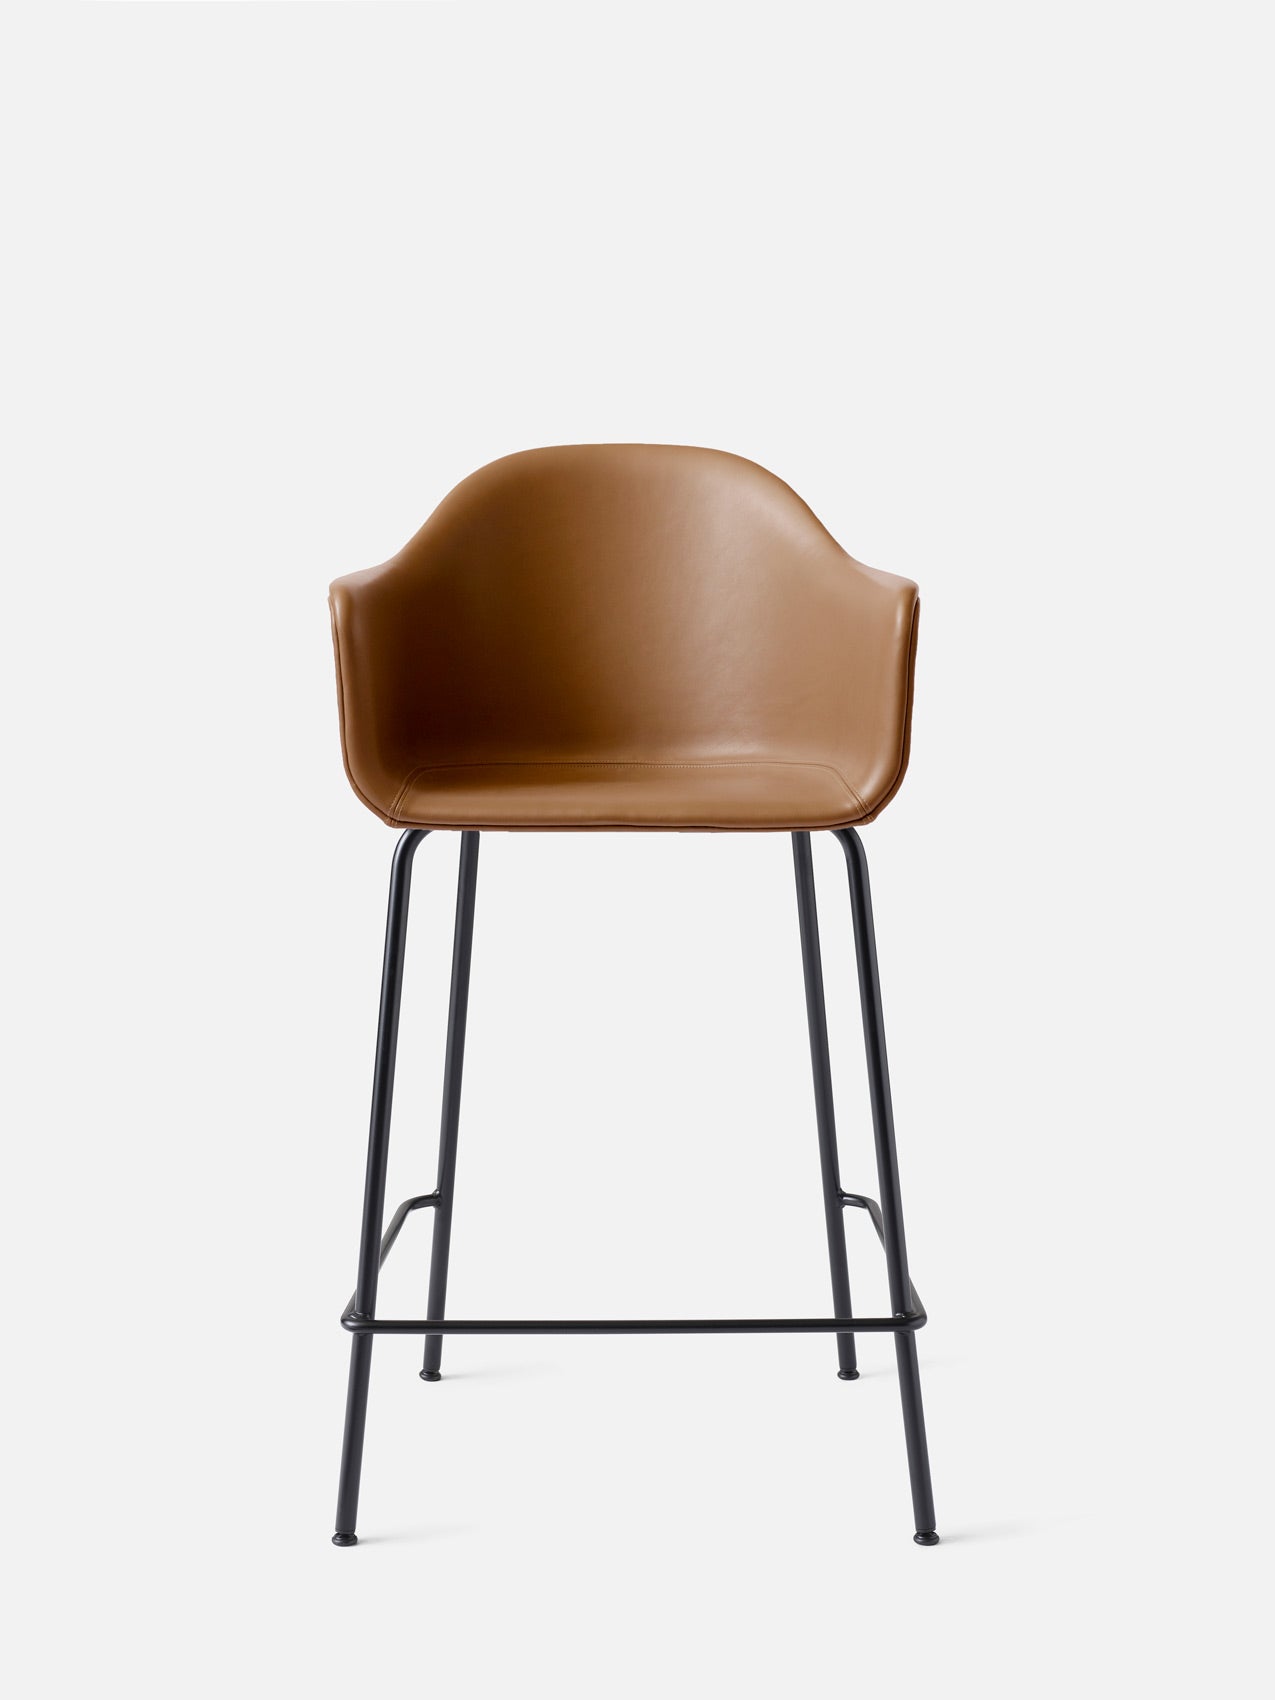 Harbour Arm Chair, Upholstered-Chair-Norm Architects-Counter Height (Seat 24.8in H)/Black Steel-0250 Cognac/Dakar-menu-minimalist-modern-danish-design-home-decor